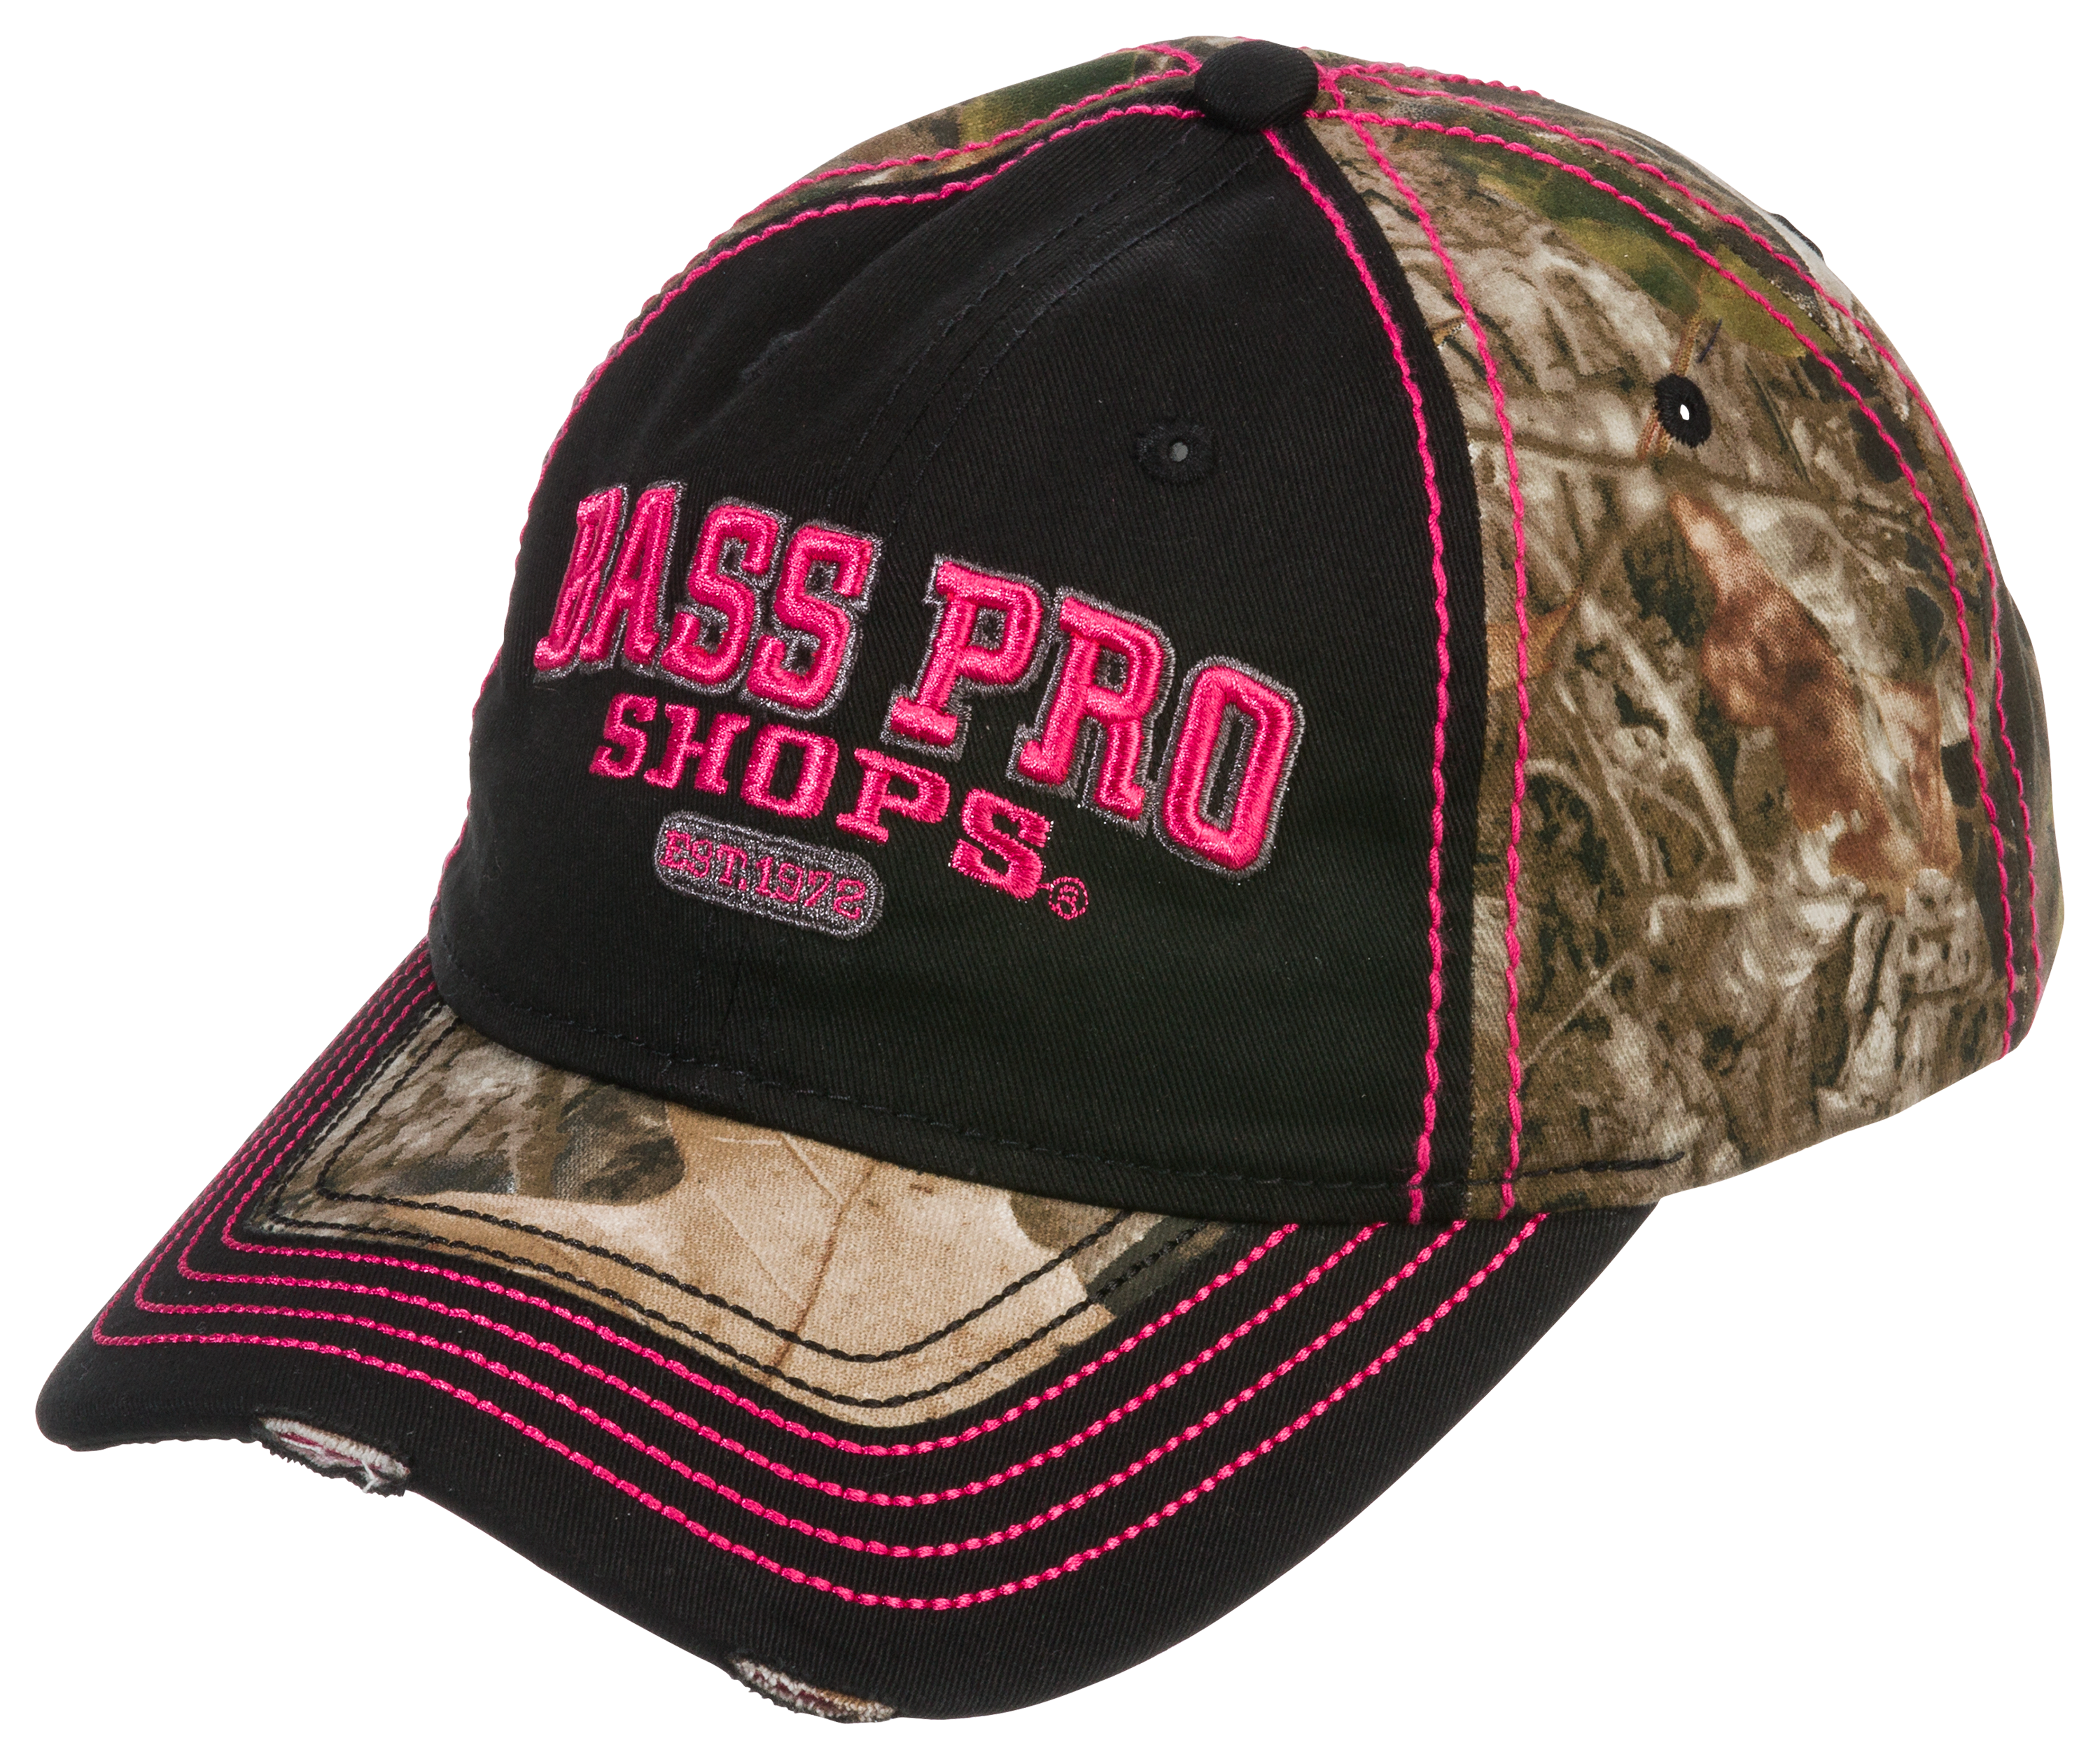 Bass Pro Shops Block Letter Hot Pink Logo Cap for Ladies